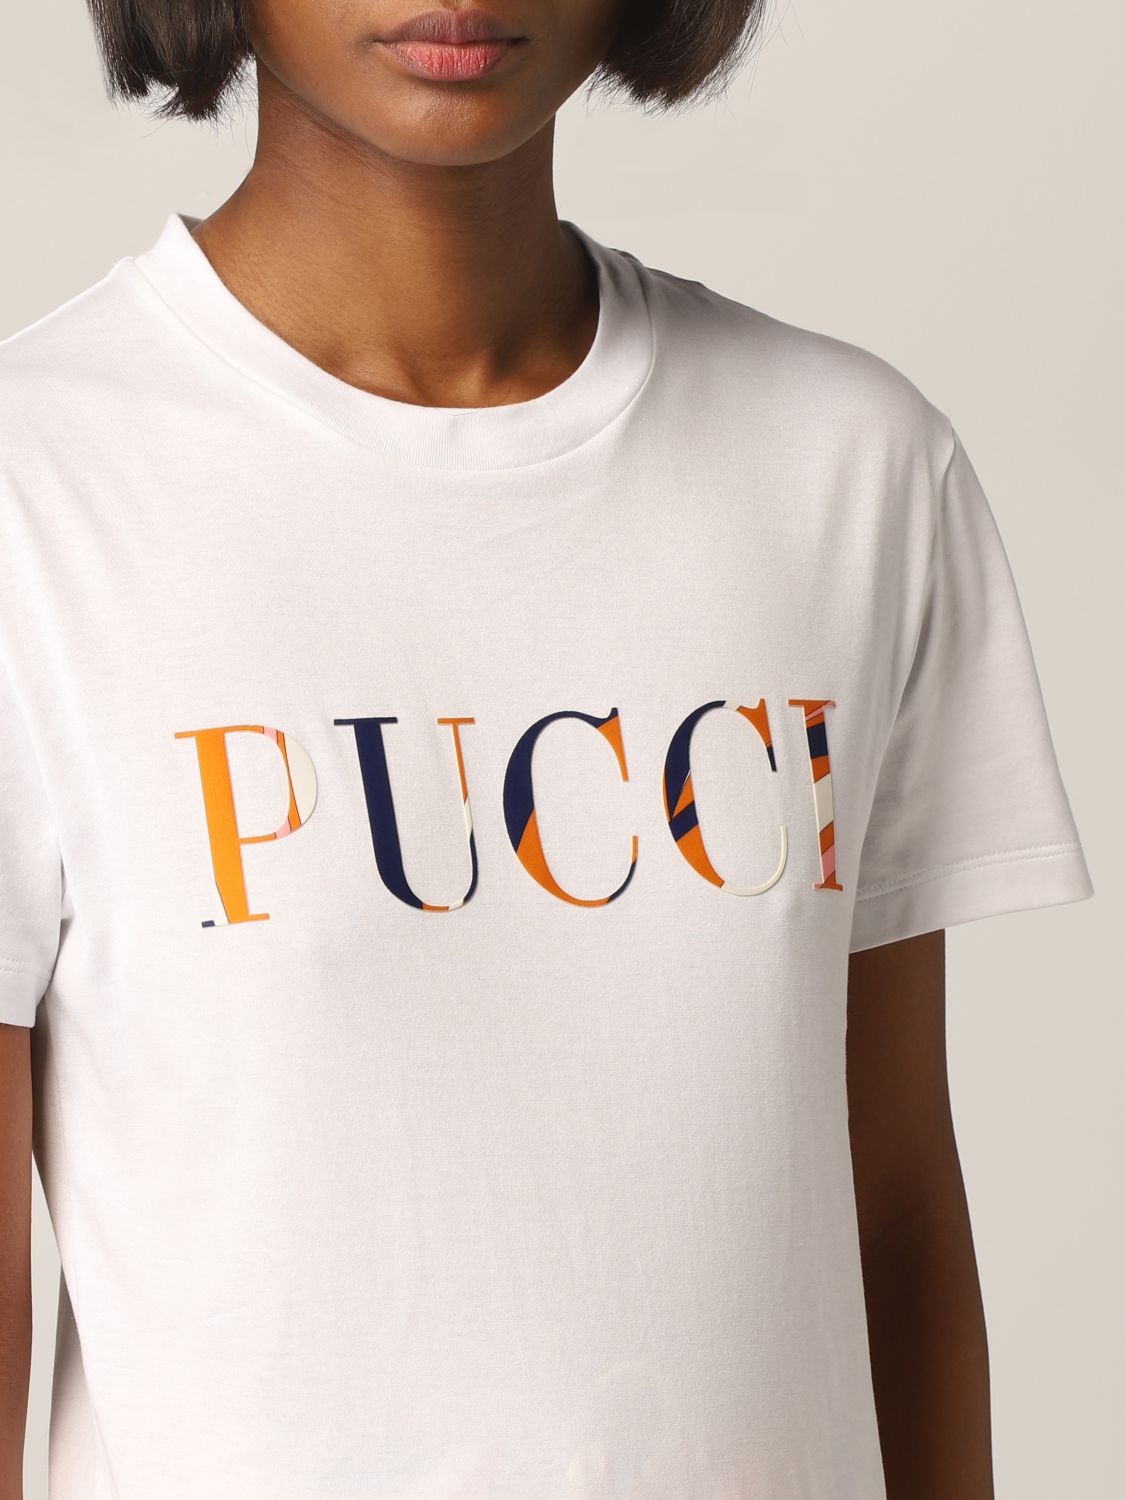 EMILIO PUCCI: logo t-shirt - Black  Emilio Pucci t-shirt 1HTP73 1H987  online at